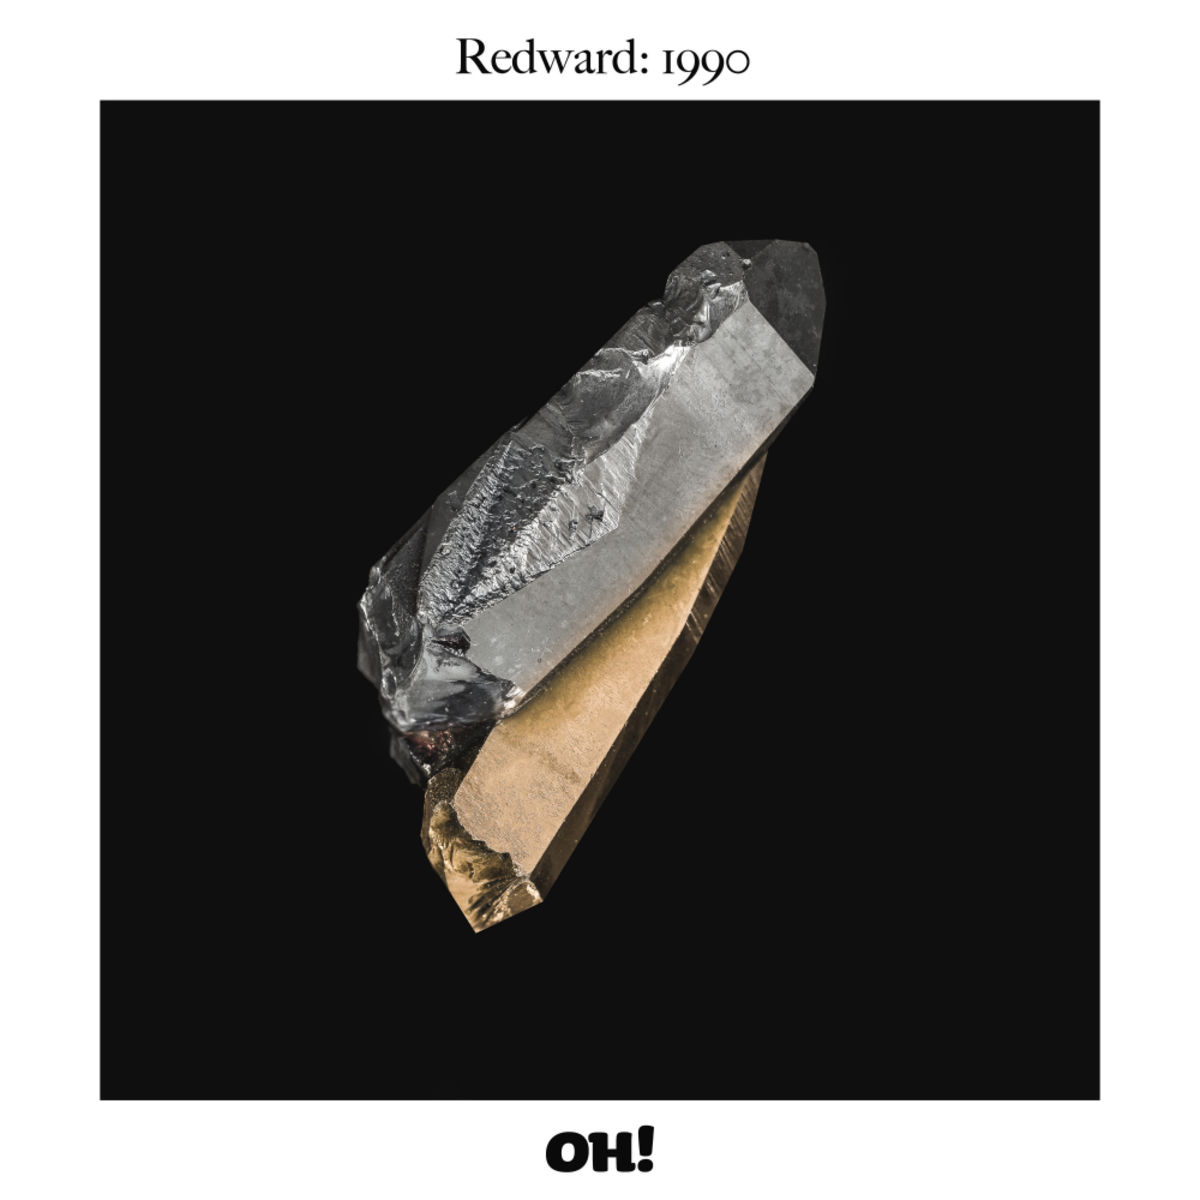 Redward - 1990 / Oh! Records Stockholm